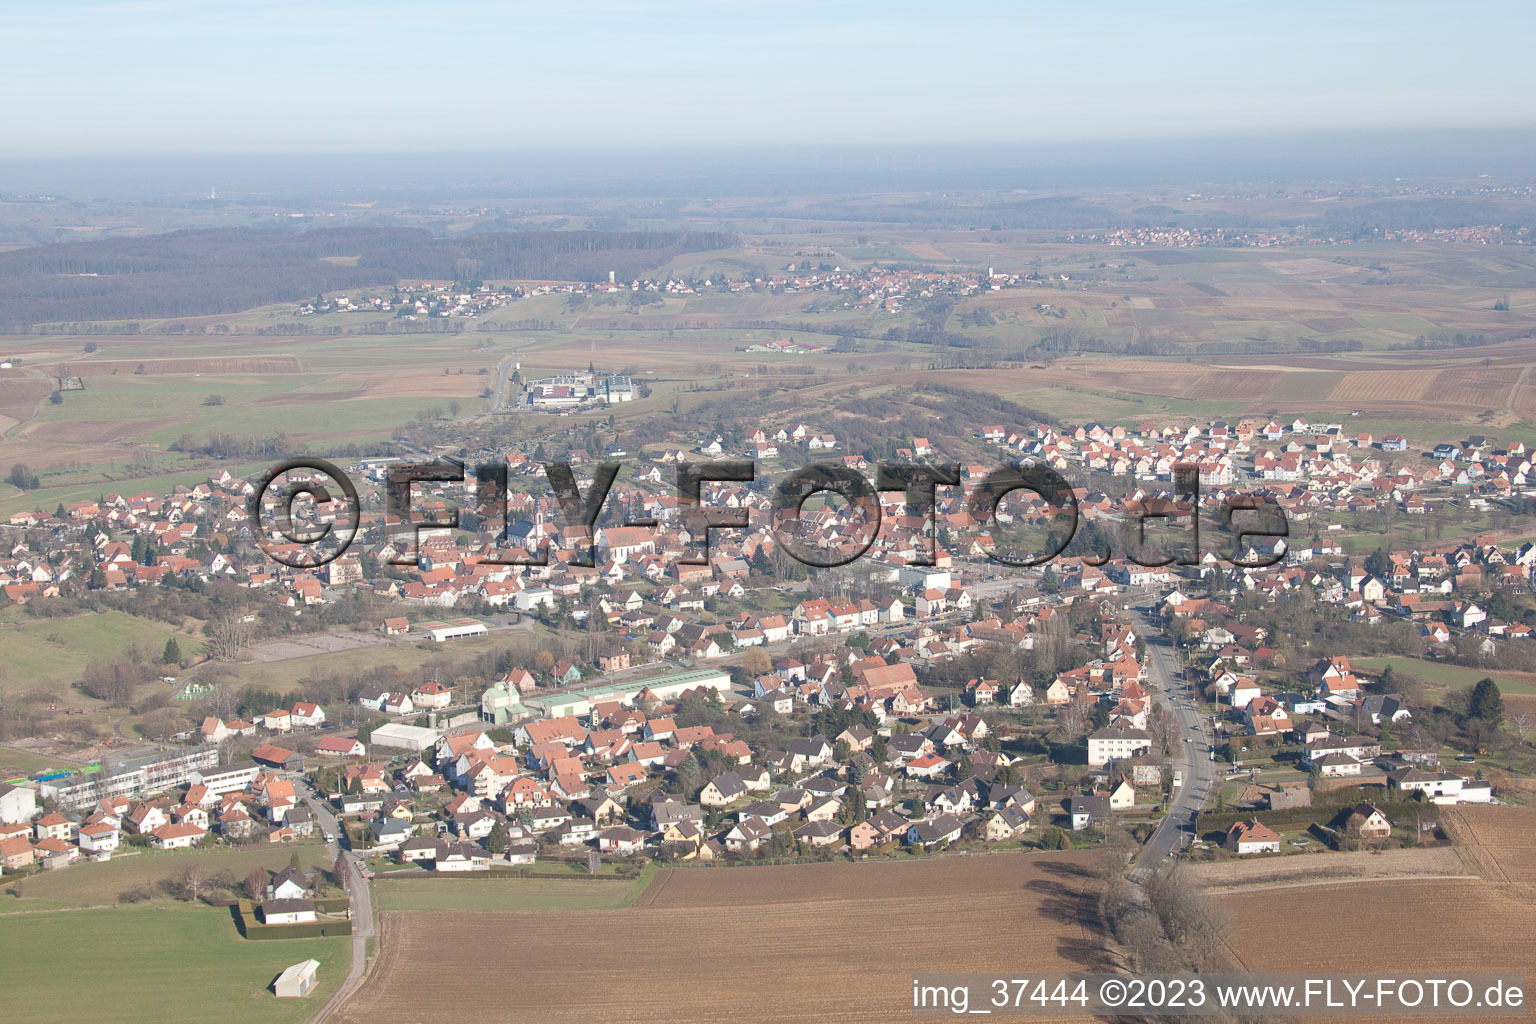 Luftbild von Soultz-sous-Forêts (Elsaß) im Bundesland Bas-Rhin, Frankreich